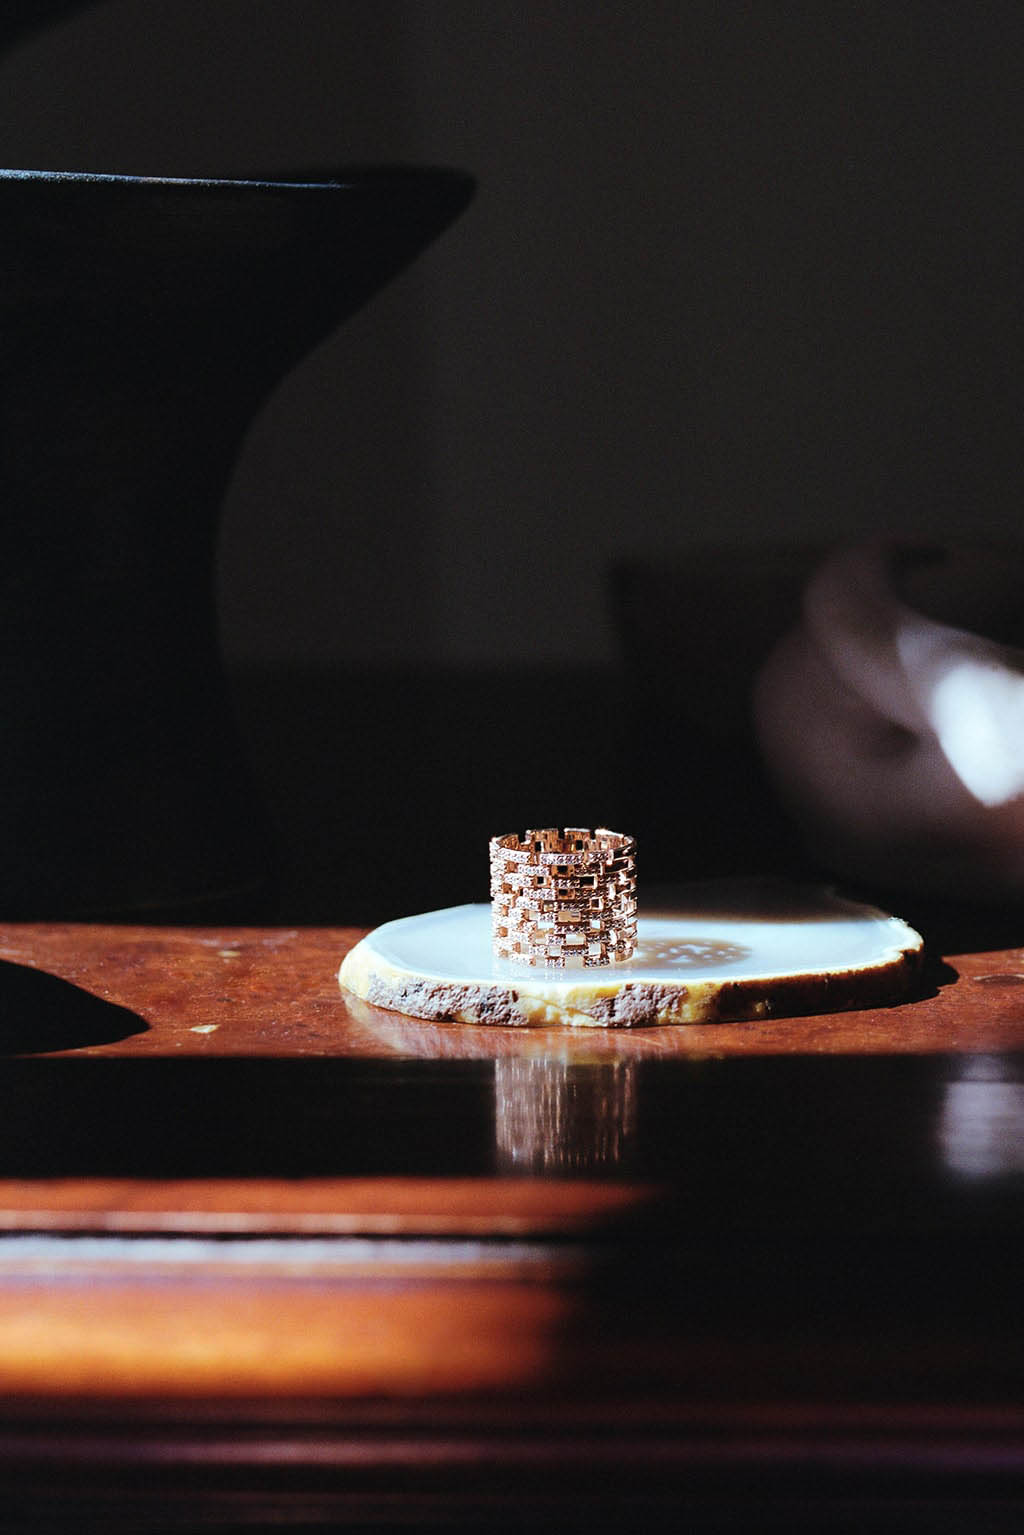 Brick diamonds gold ring - Sansoeurs